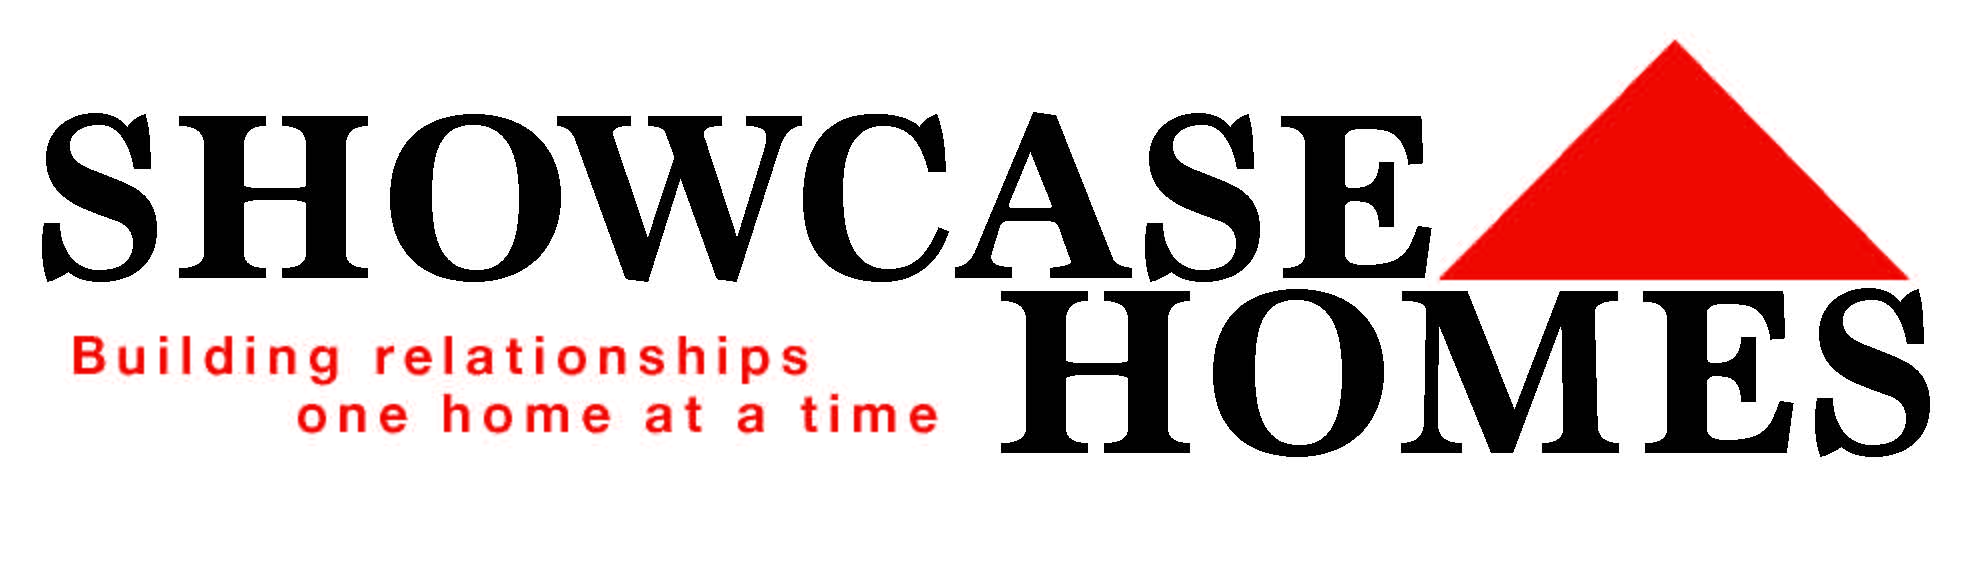 Showcase Homes company logo